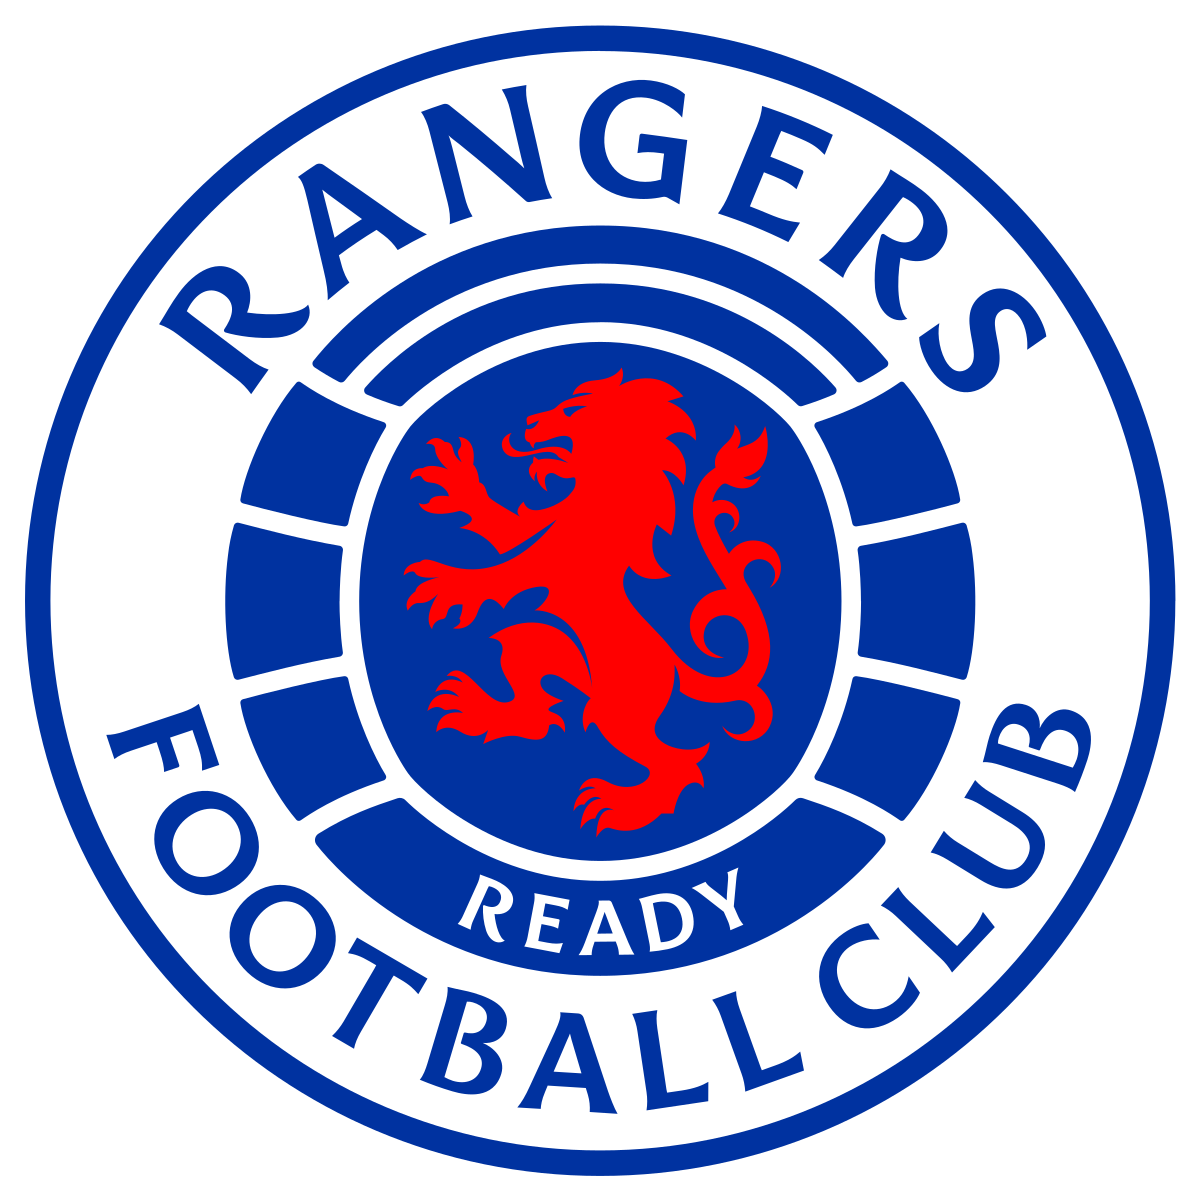 Rangers B - Clarke ePOS Scottish Lowland League